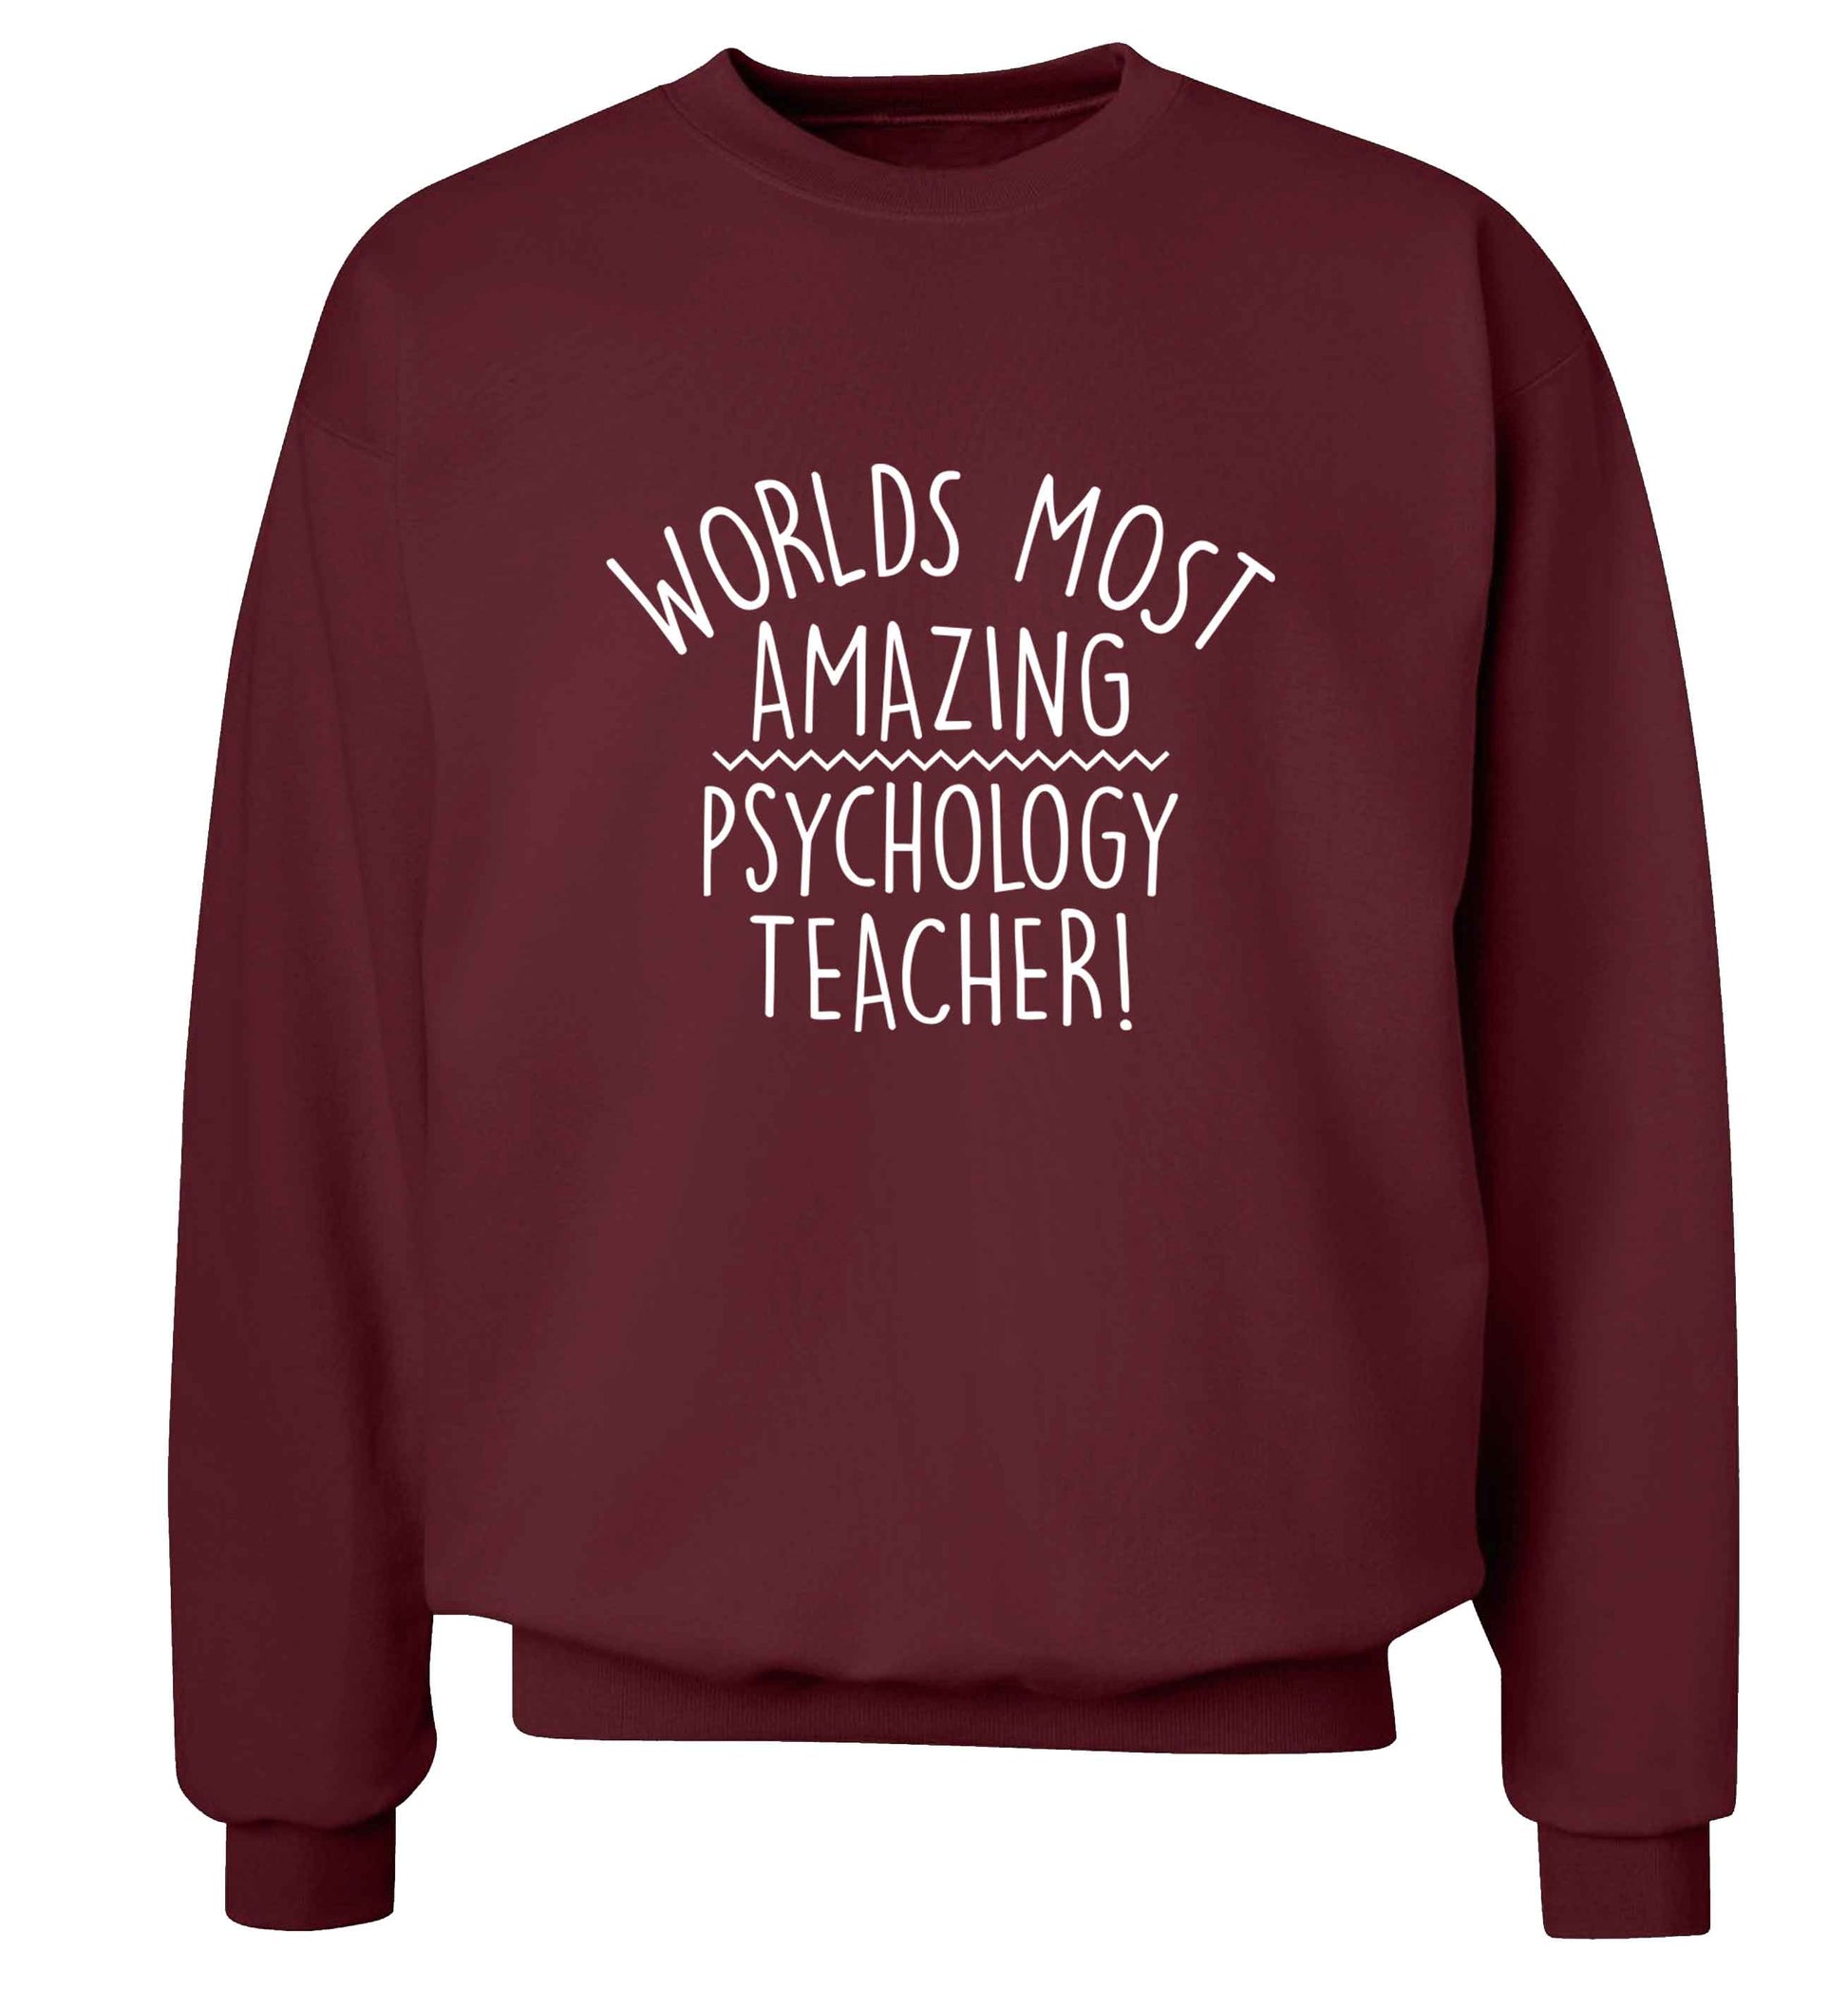 Worlds most amazing psychology teacher adult's unisex maroon sweater 2XL